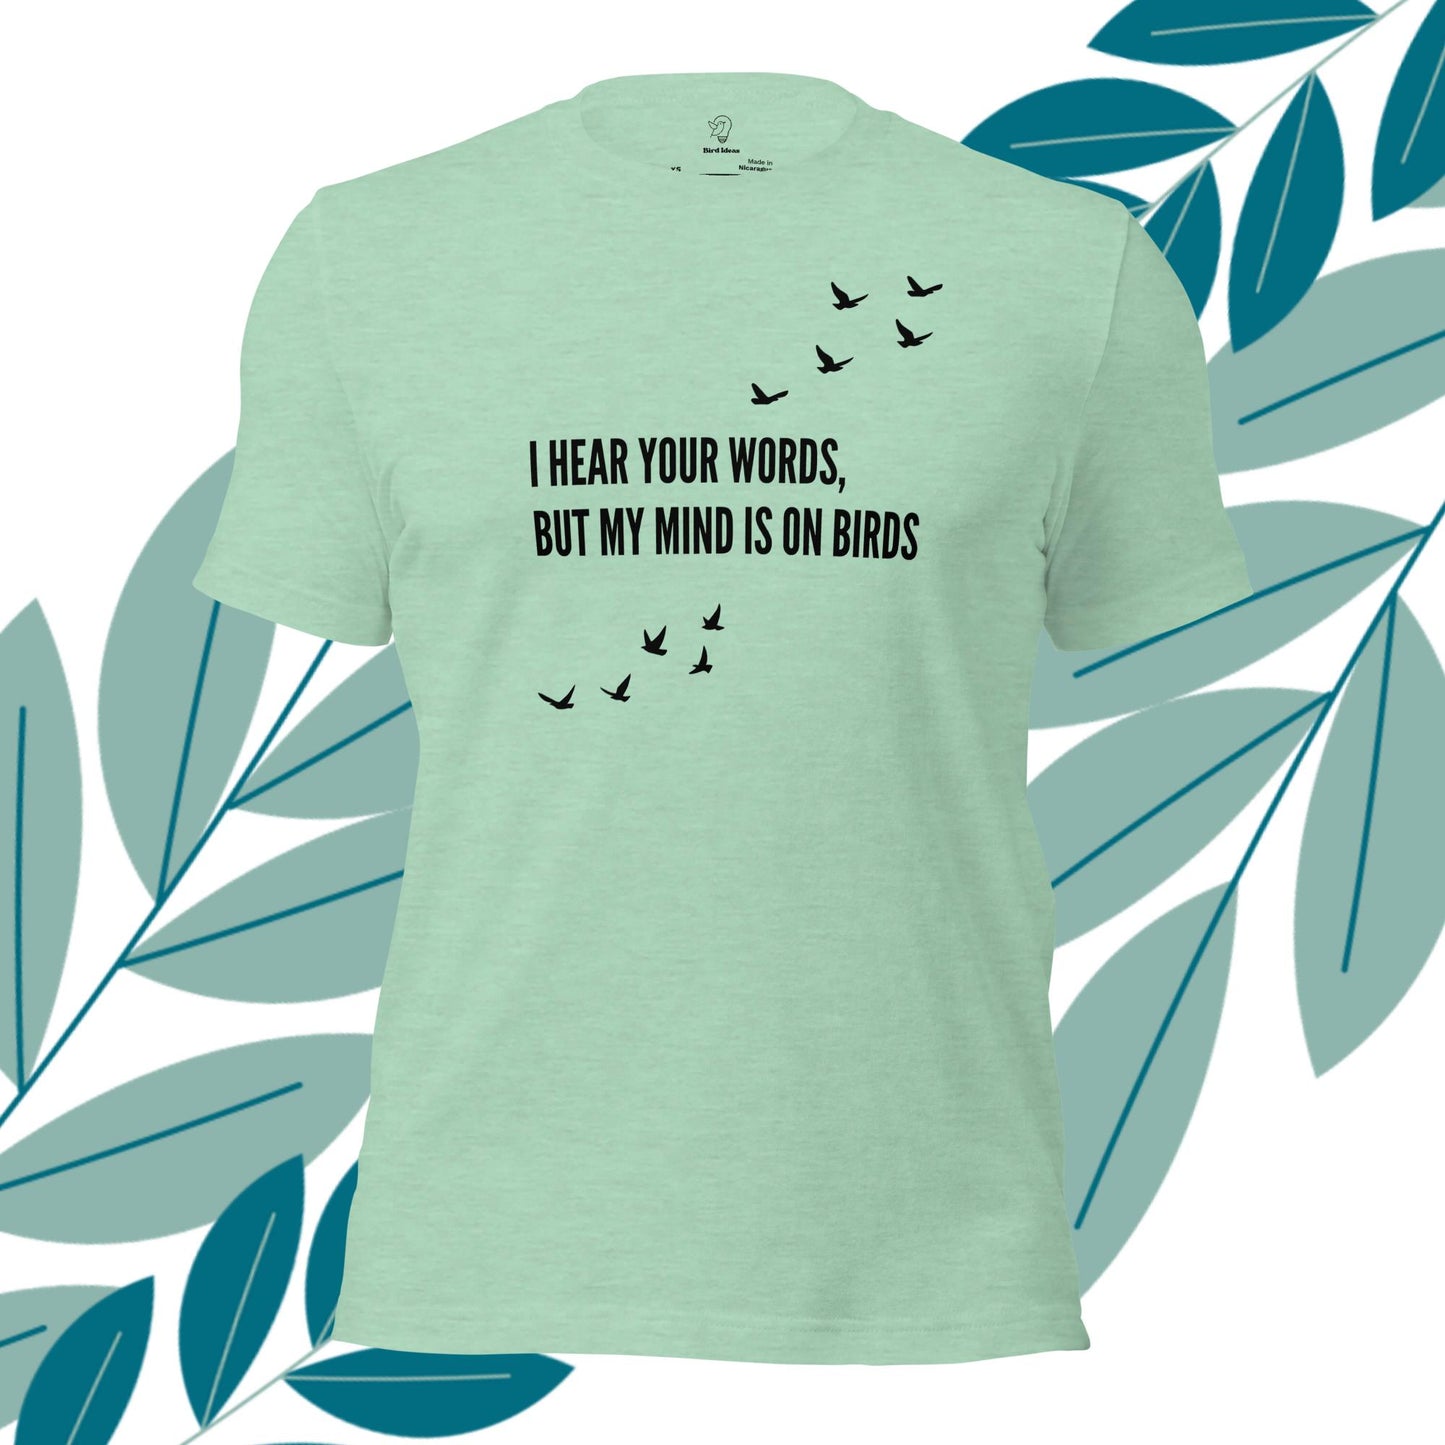 Birds on the Mind T-shirt